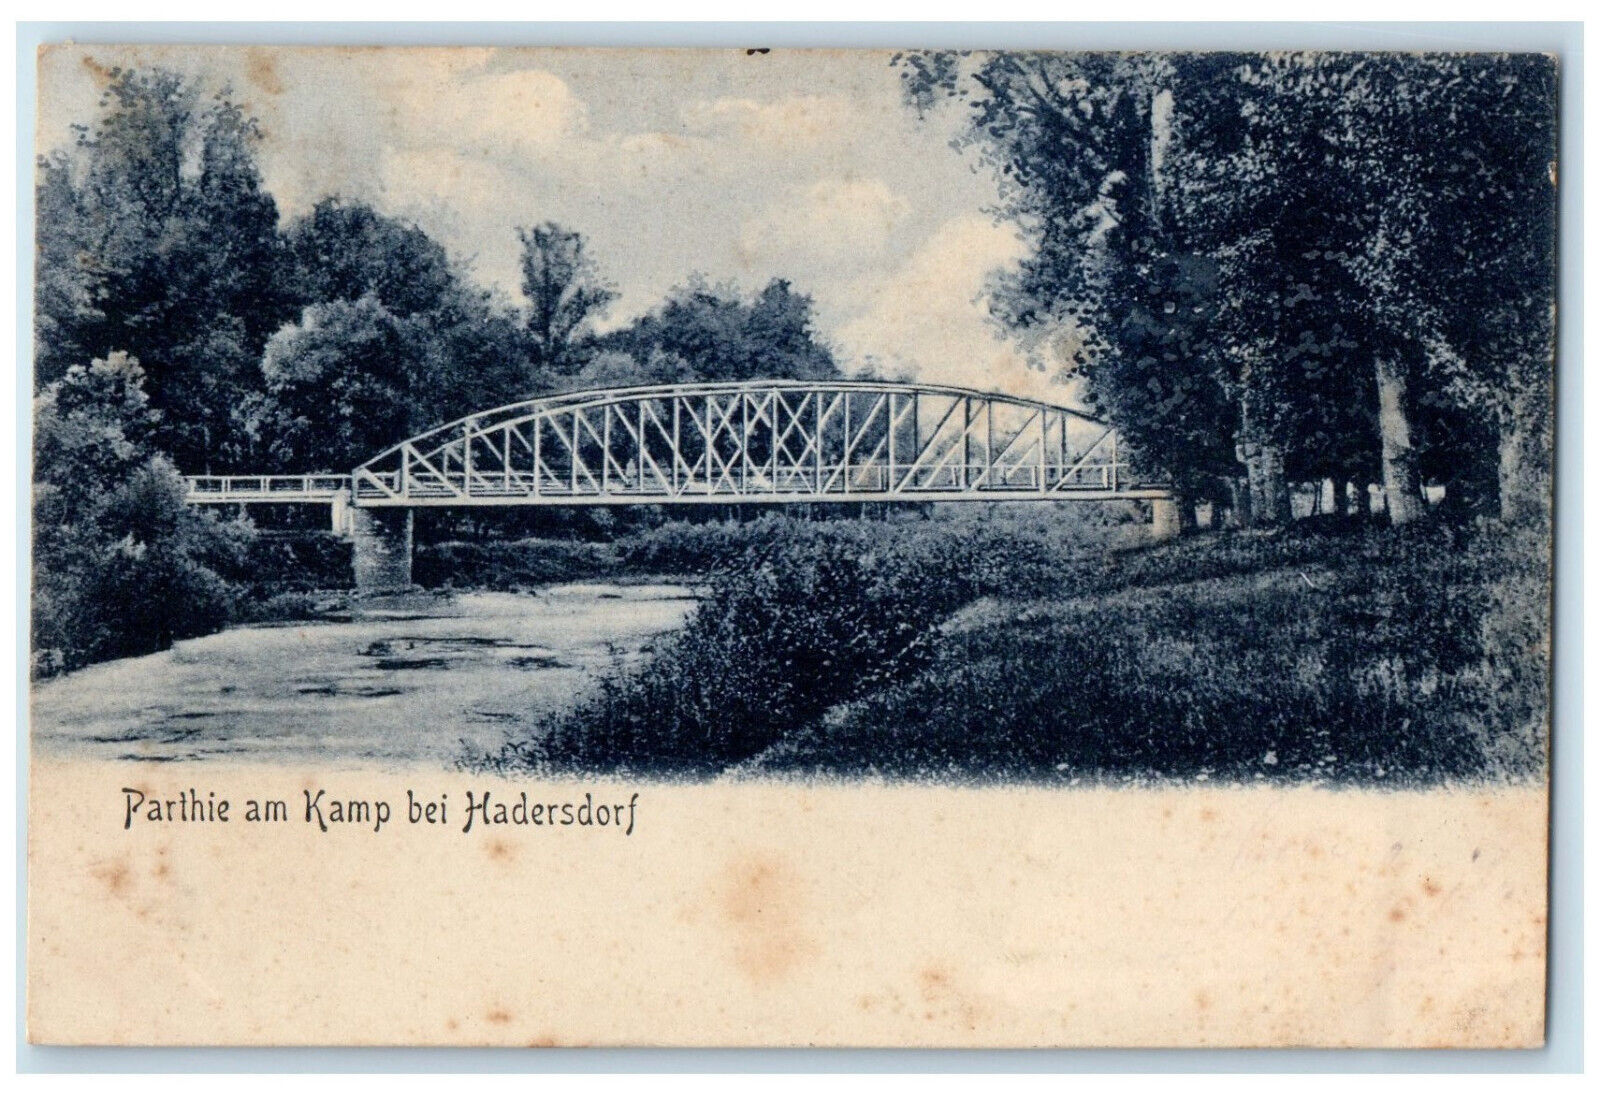 c1910 At the Camp Near Hadersdorf-Kammern Lower Austria Austria Postcard